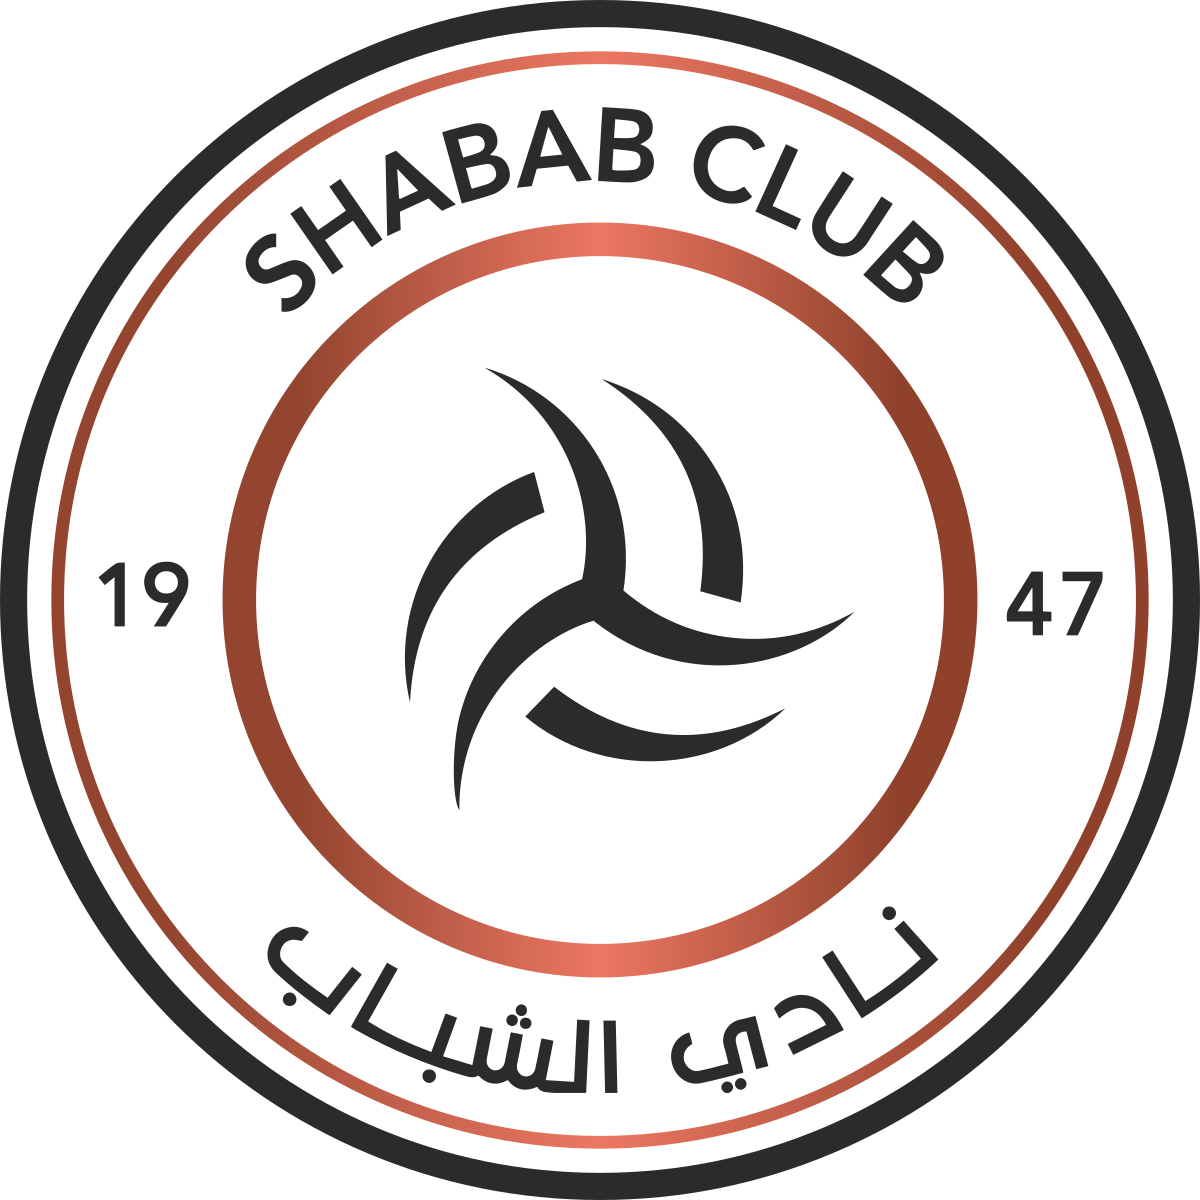 ACL - Full Match - Group C  Al Ittihad (KSA) vs Sepahan SC (IRN) 